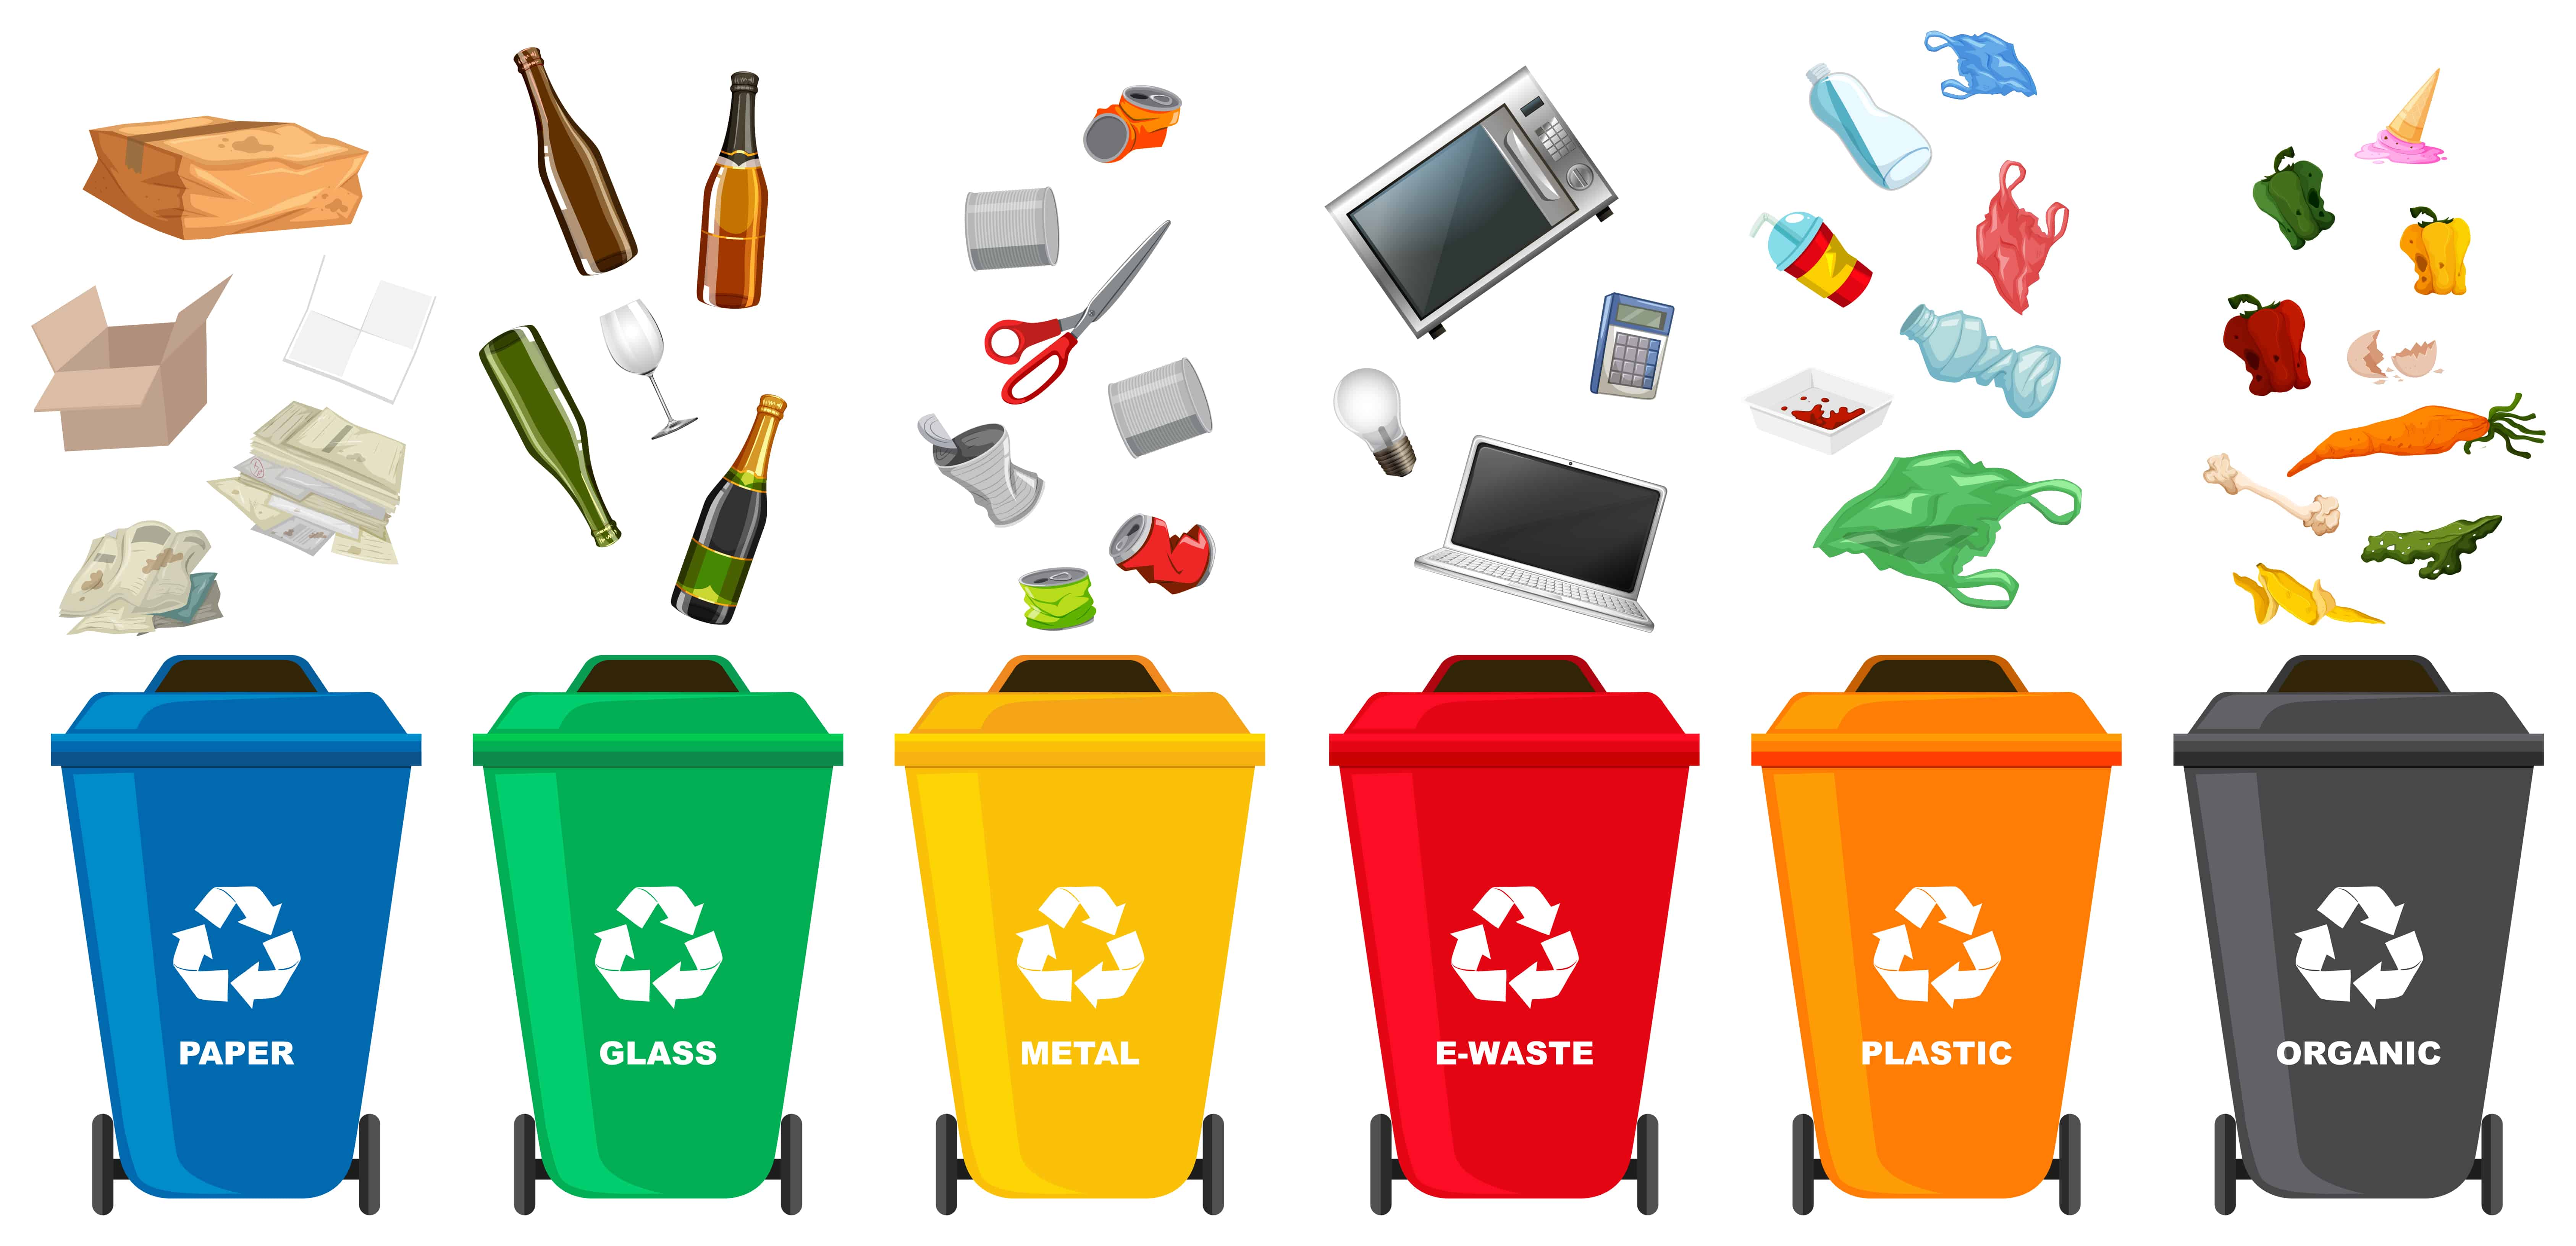 Reduce Reuse Recycle Food Waste